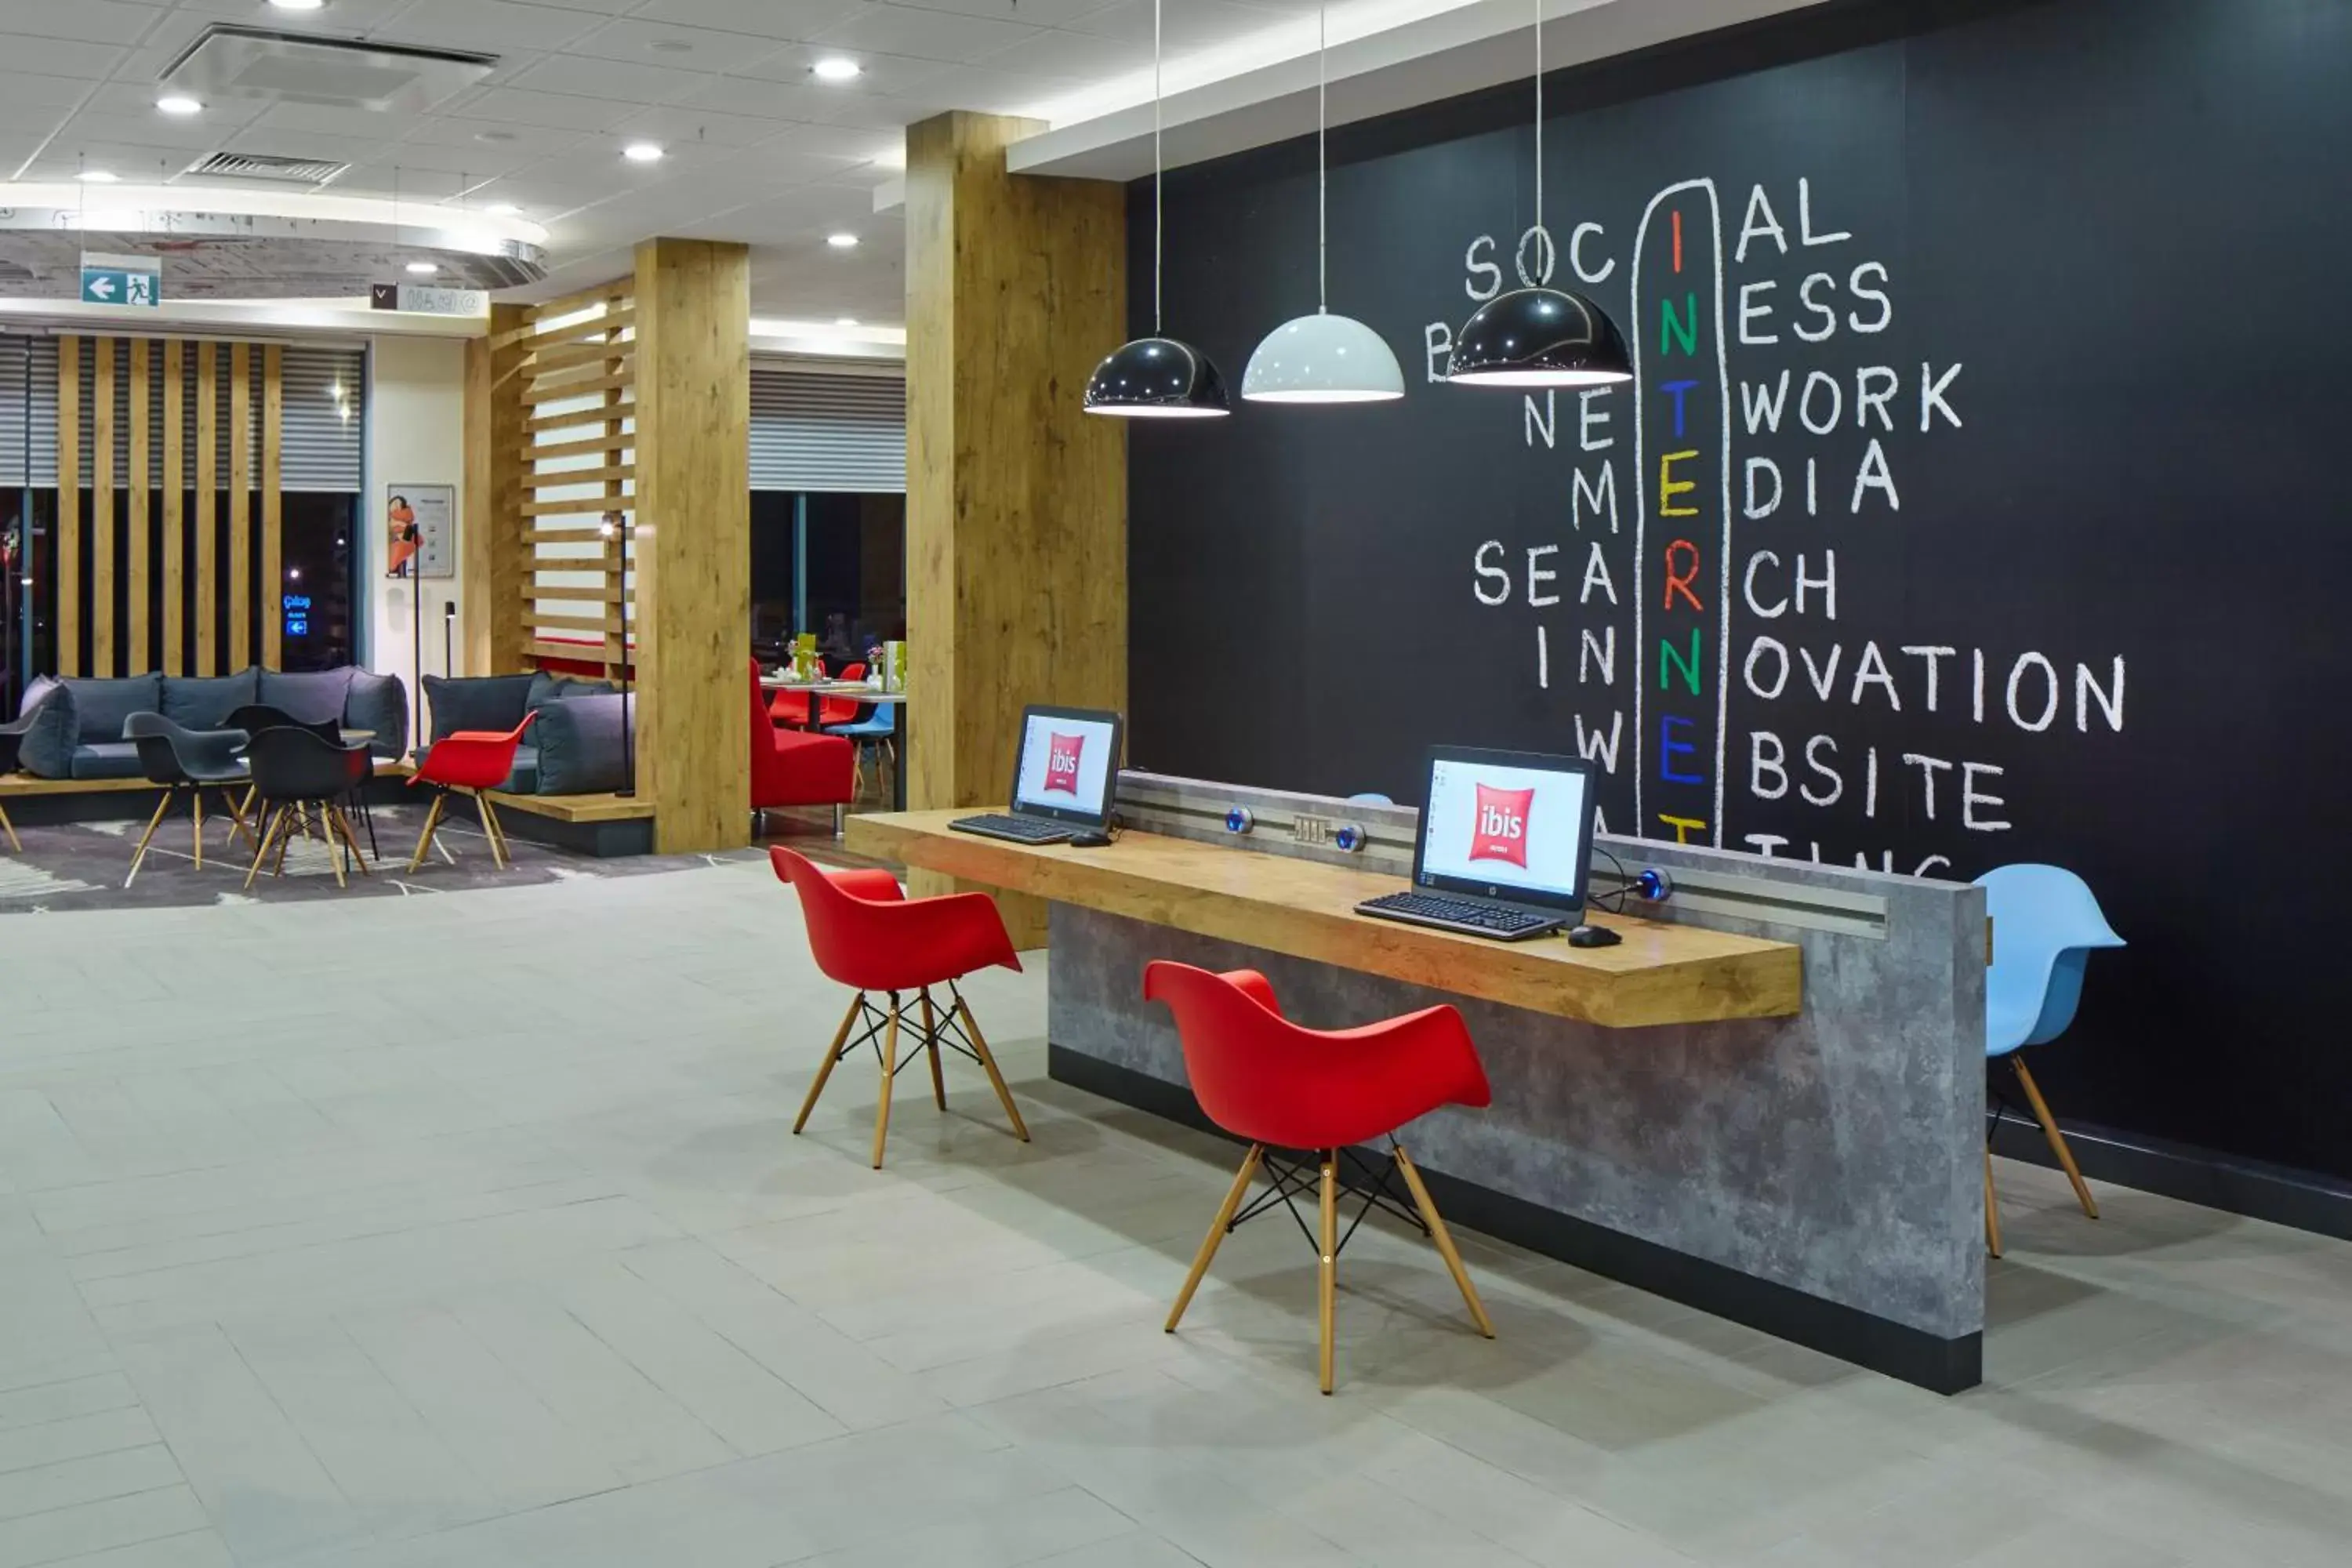 Business facilities in ibis Ankara Airport Hotel